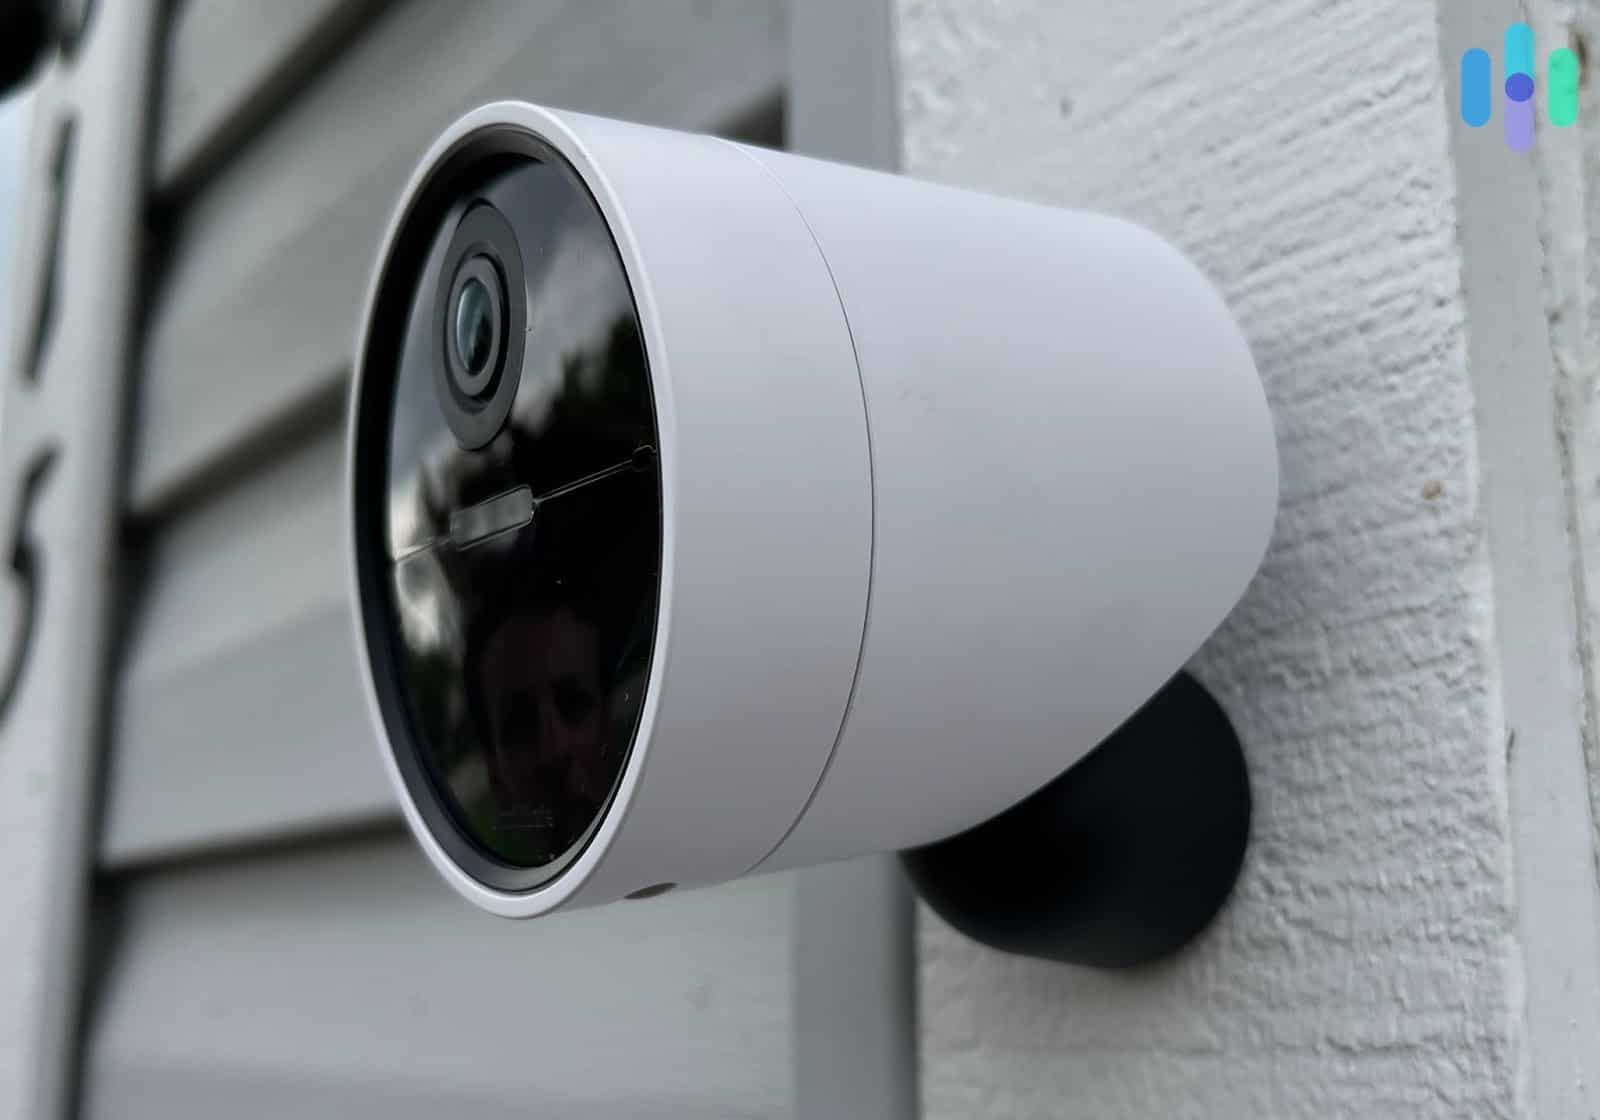 The new SimpliSafe Outdoor camera